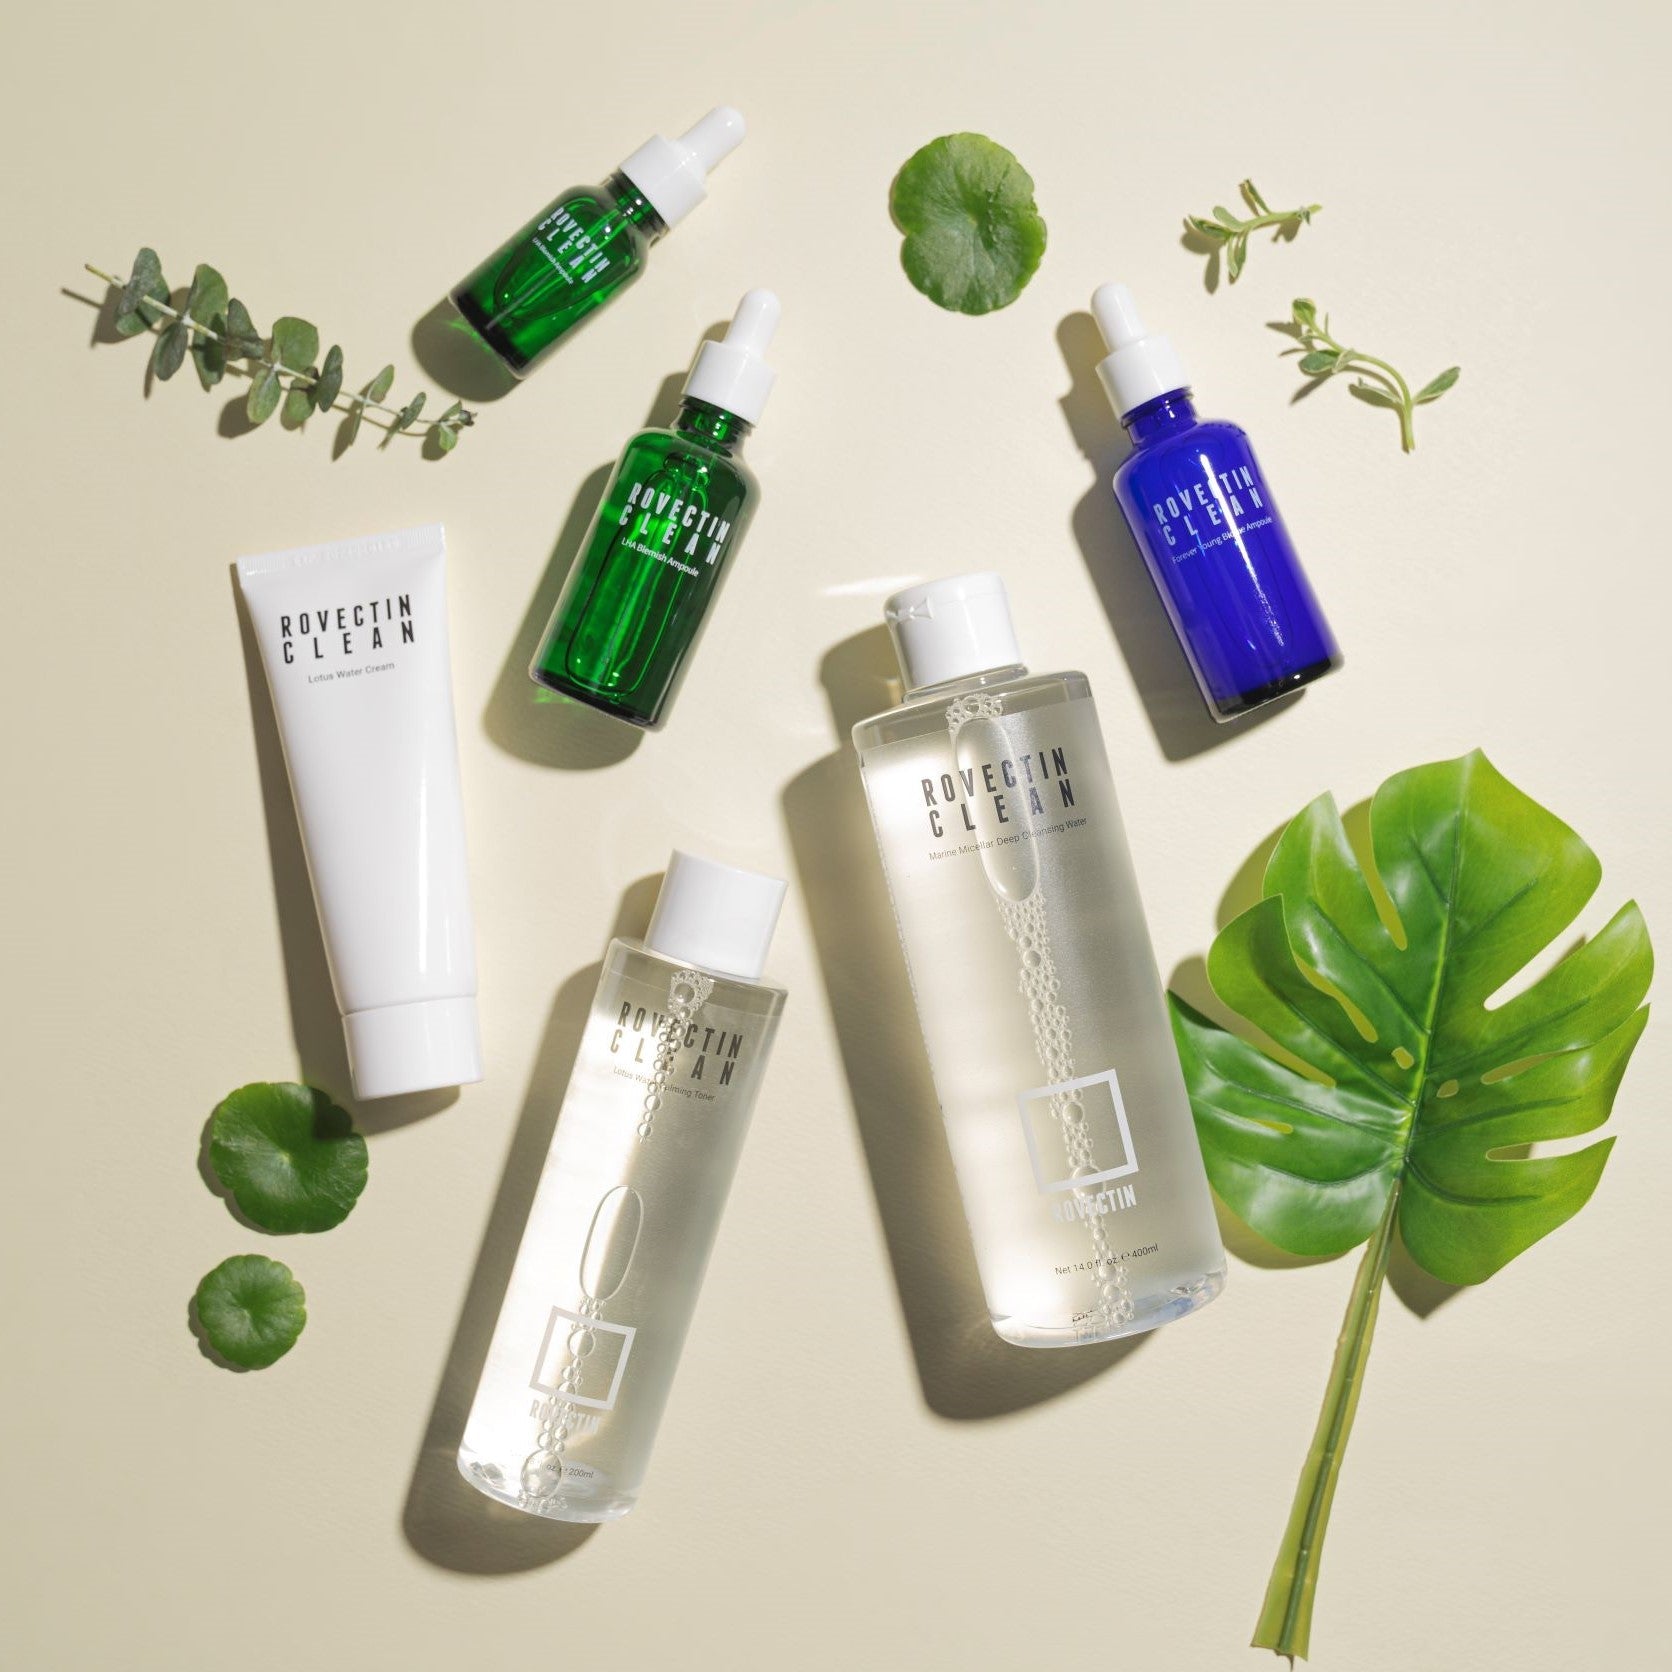  Lotus Water Calming Toner by Rovectin Skin Essentials Rovectin Skin Essentials Perfumarie